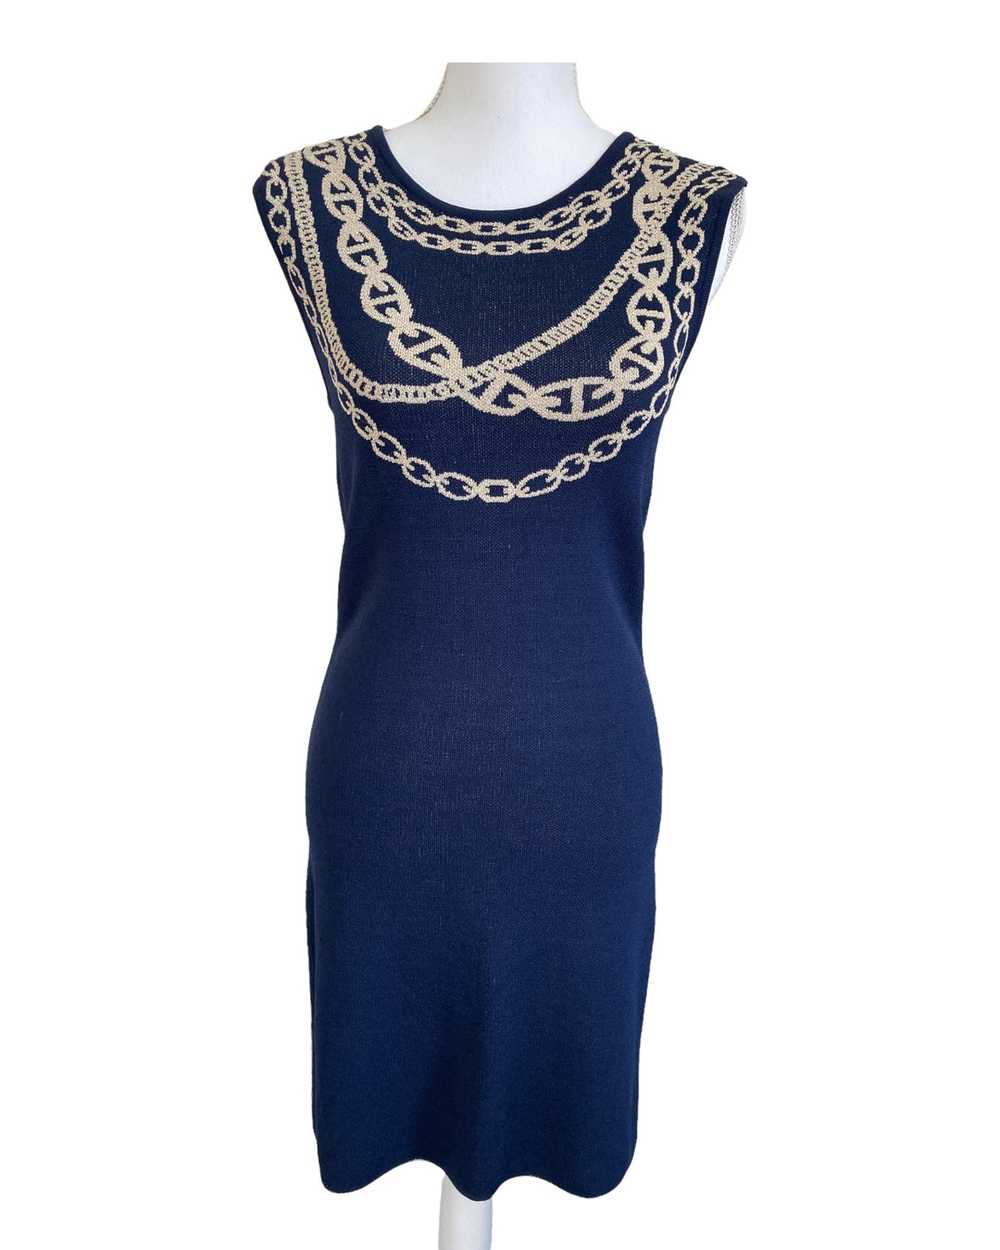 Adrienne Vittadini Navy Knit Dress, S - image 1